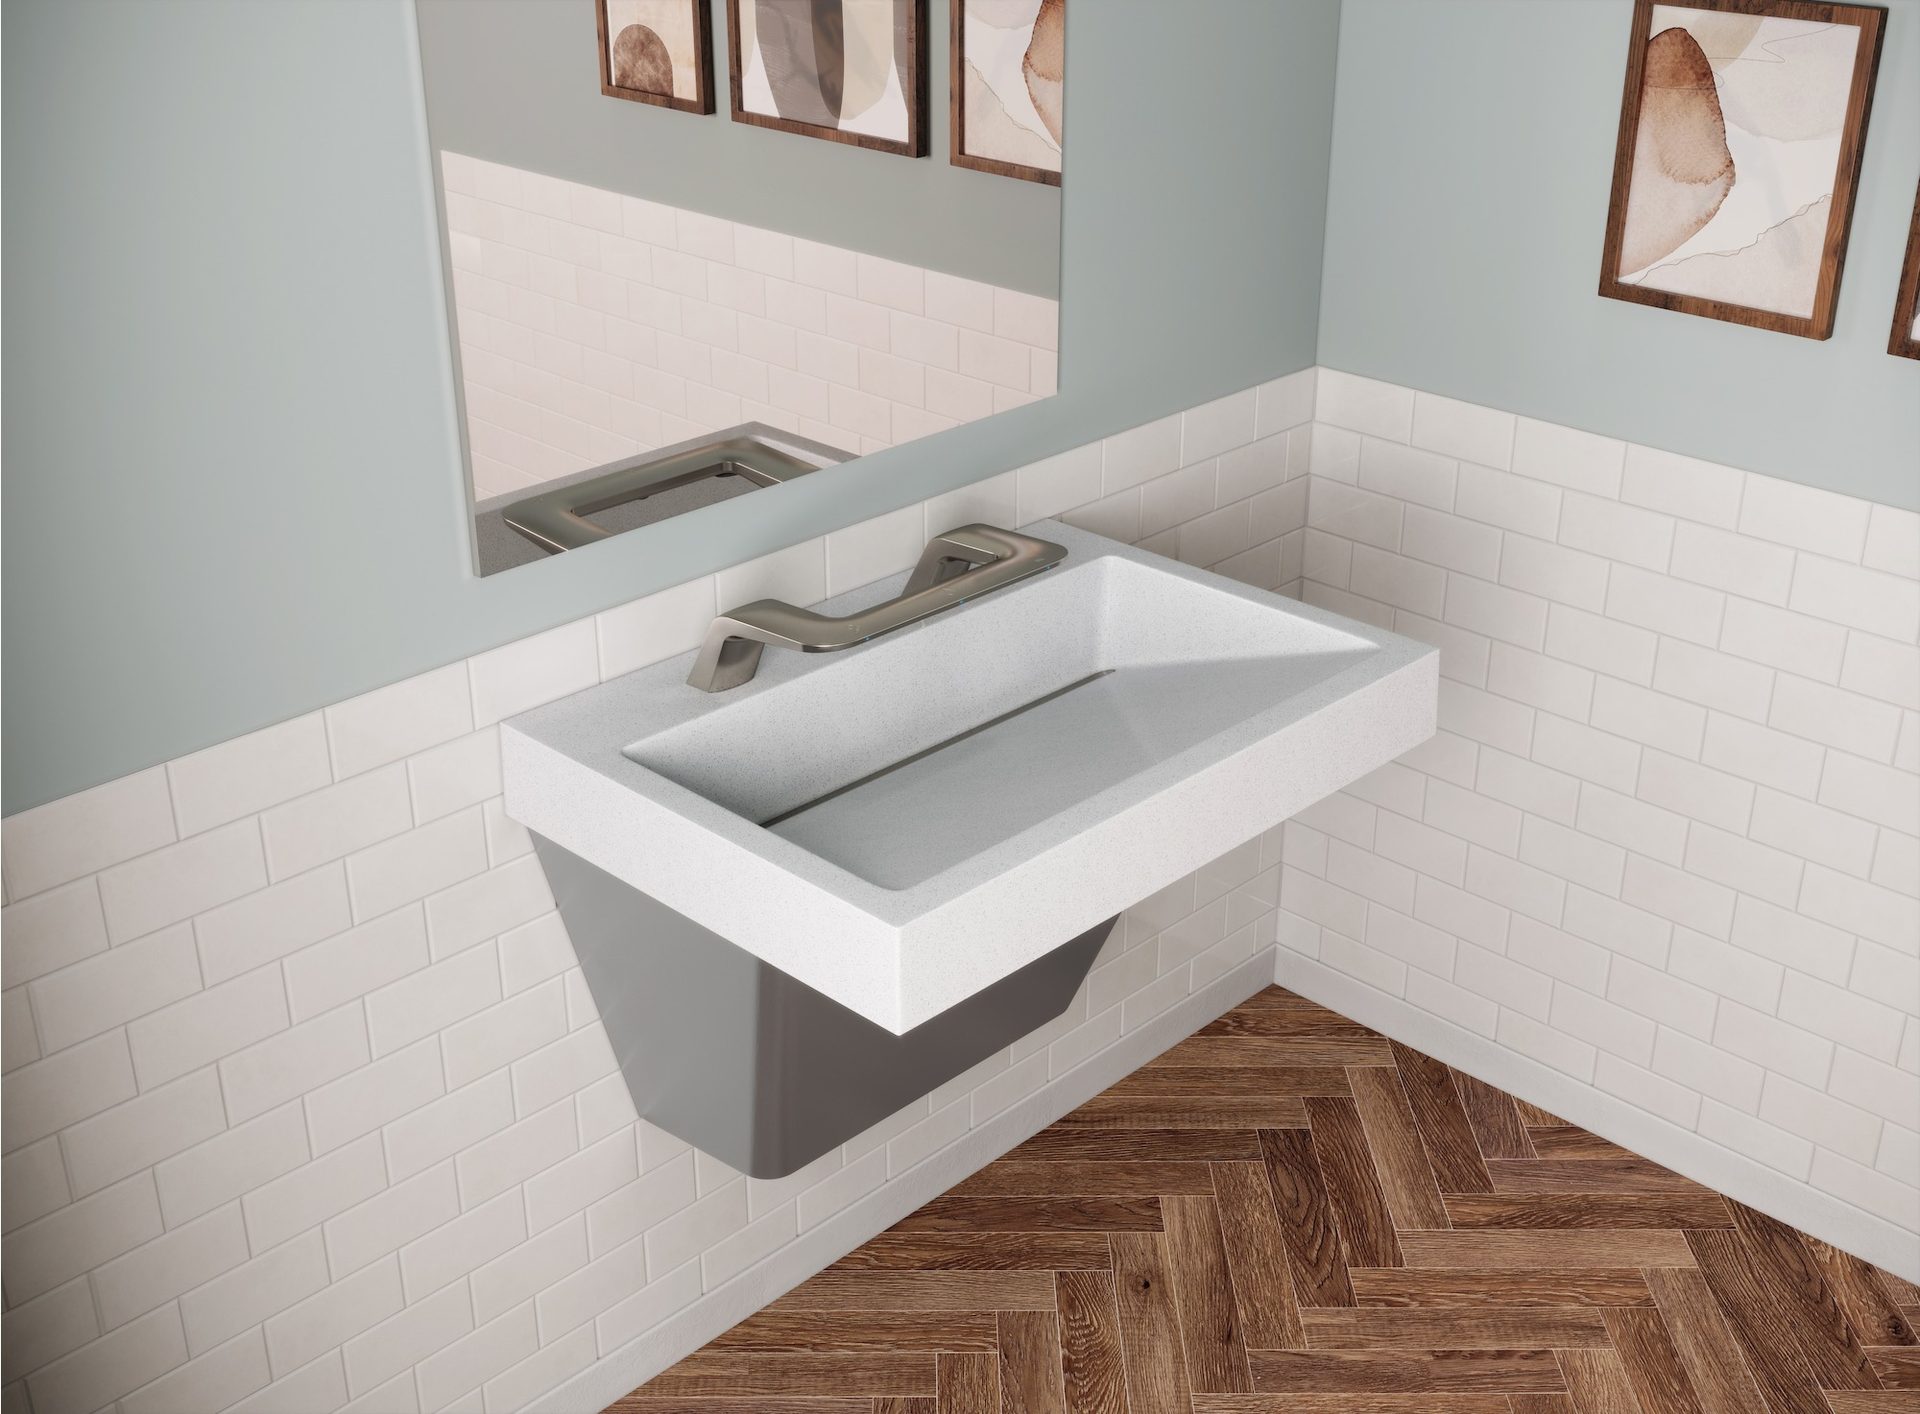 Plumbing fixture, Bathroom sink, Interior design, Tap, Property, Architecture, Mirror, Wood